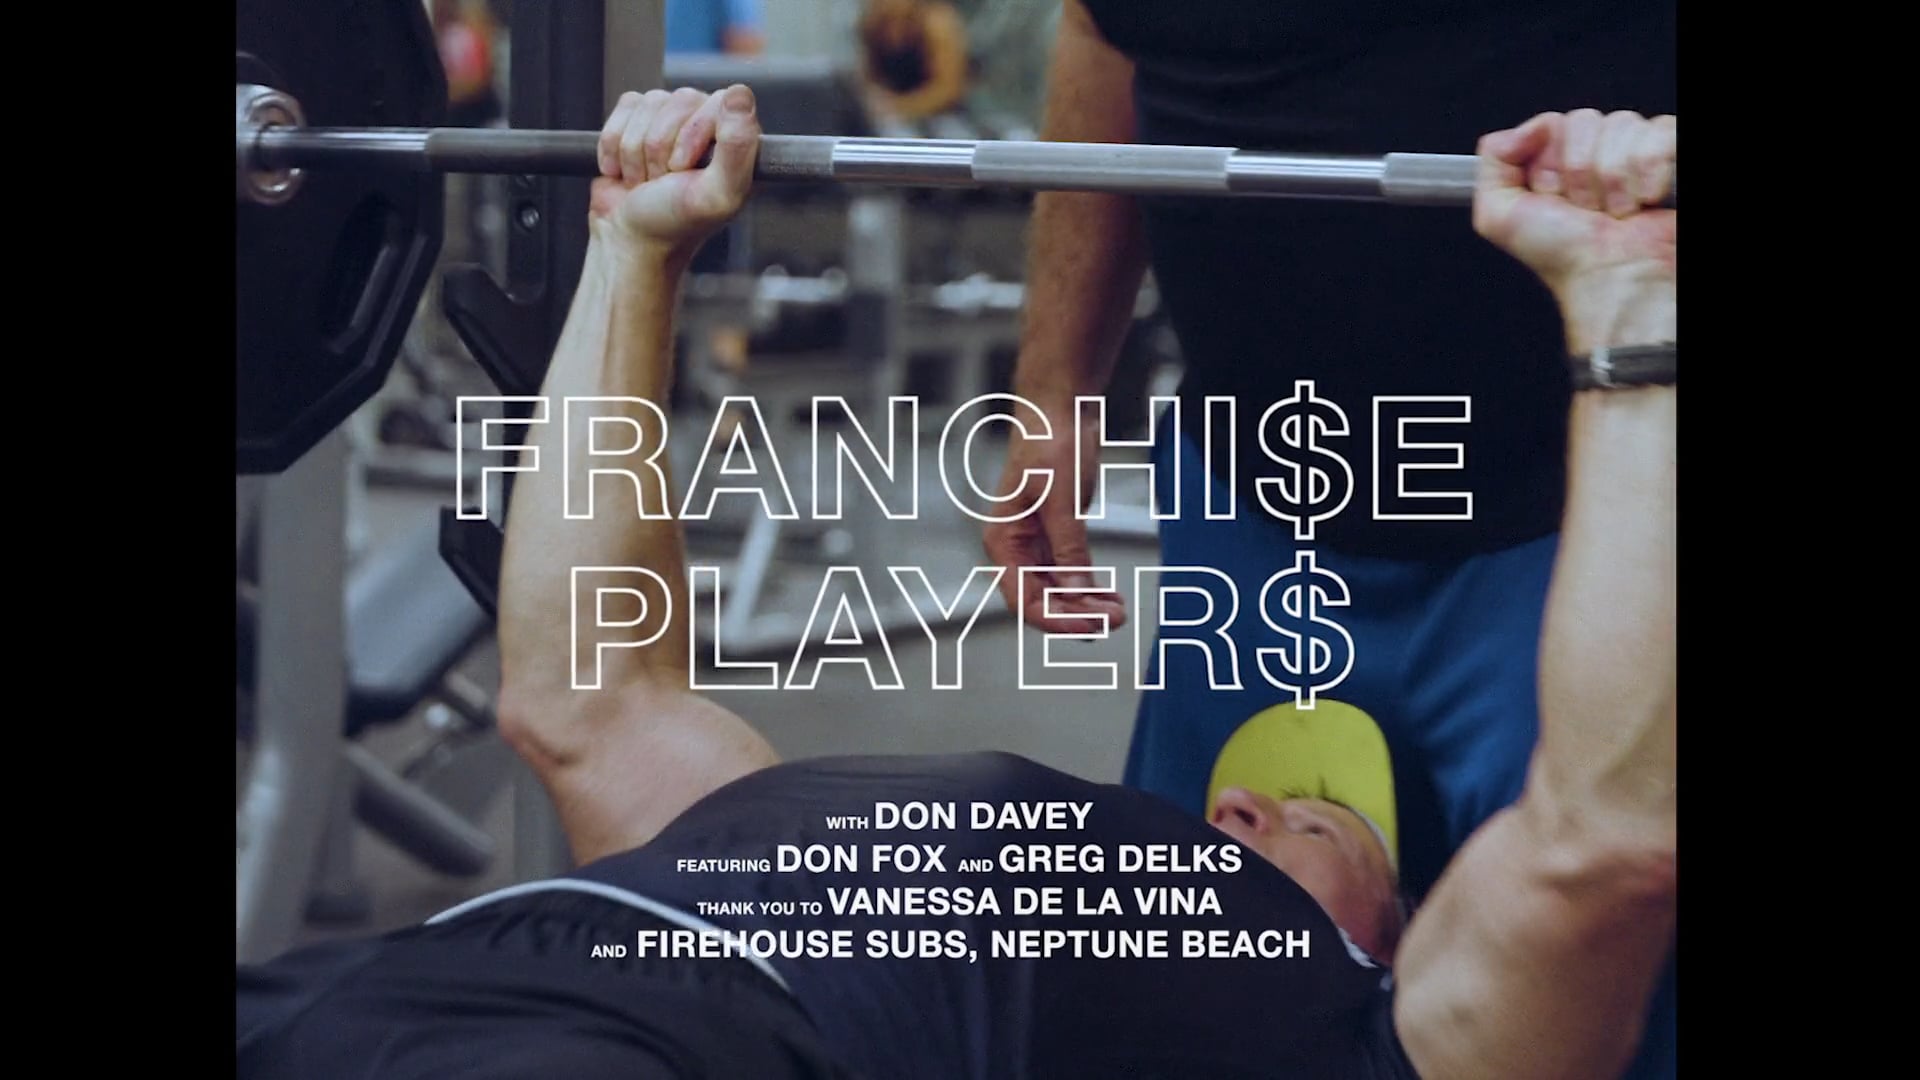 FRANCHISE PLAYERS: Meet Don Davey